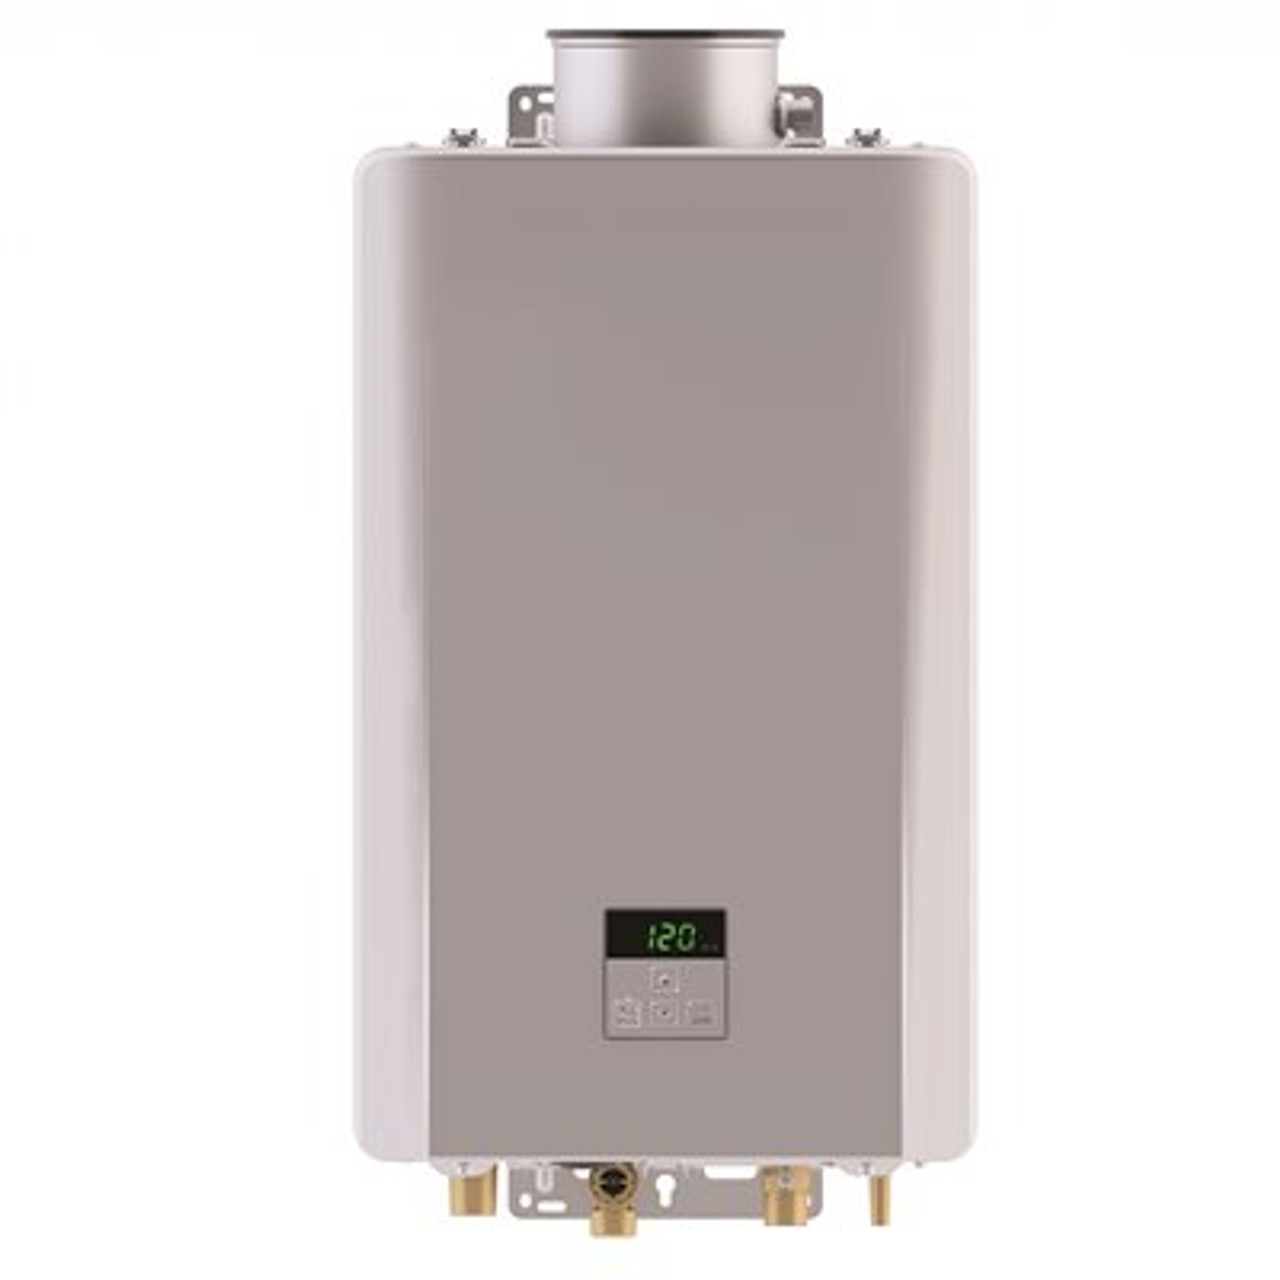 Rinnai Efficiency Series RE 9.7 GPM Residential 199,000 BTU Propane Gas Tankless Water Heater 15 Year Warranty